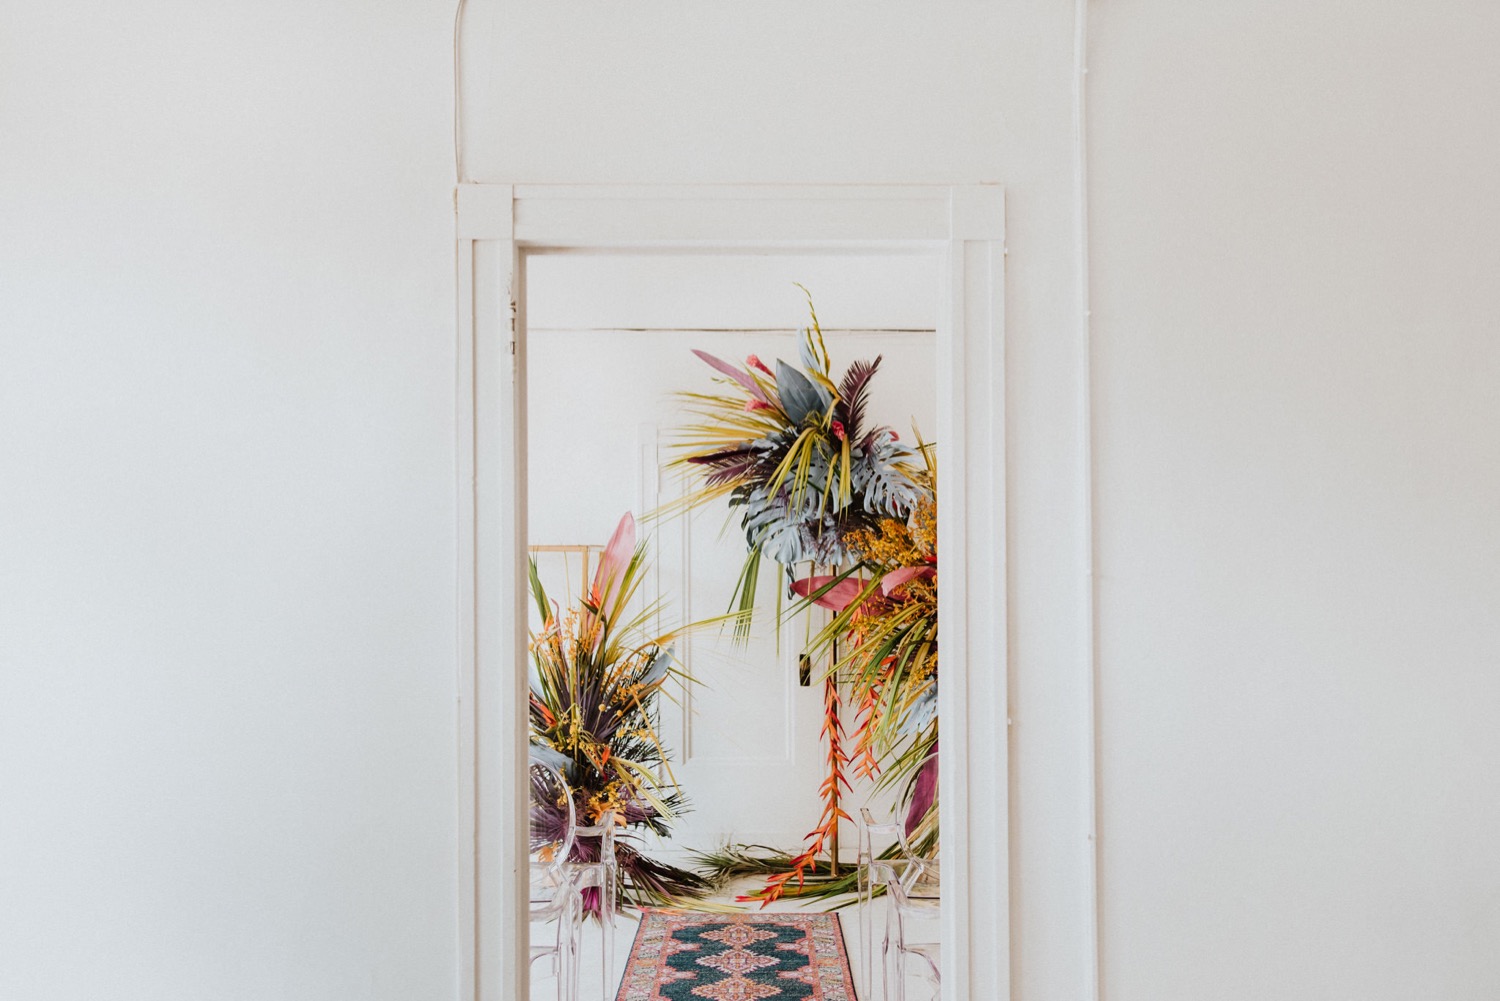 vancouver wedding photographer rich colours hanabycelsia bespoke decorstyled shoot coastalcocktails